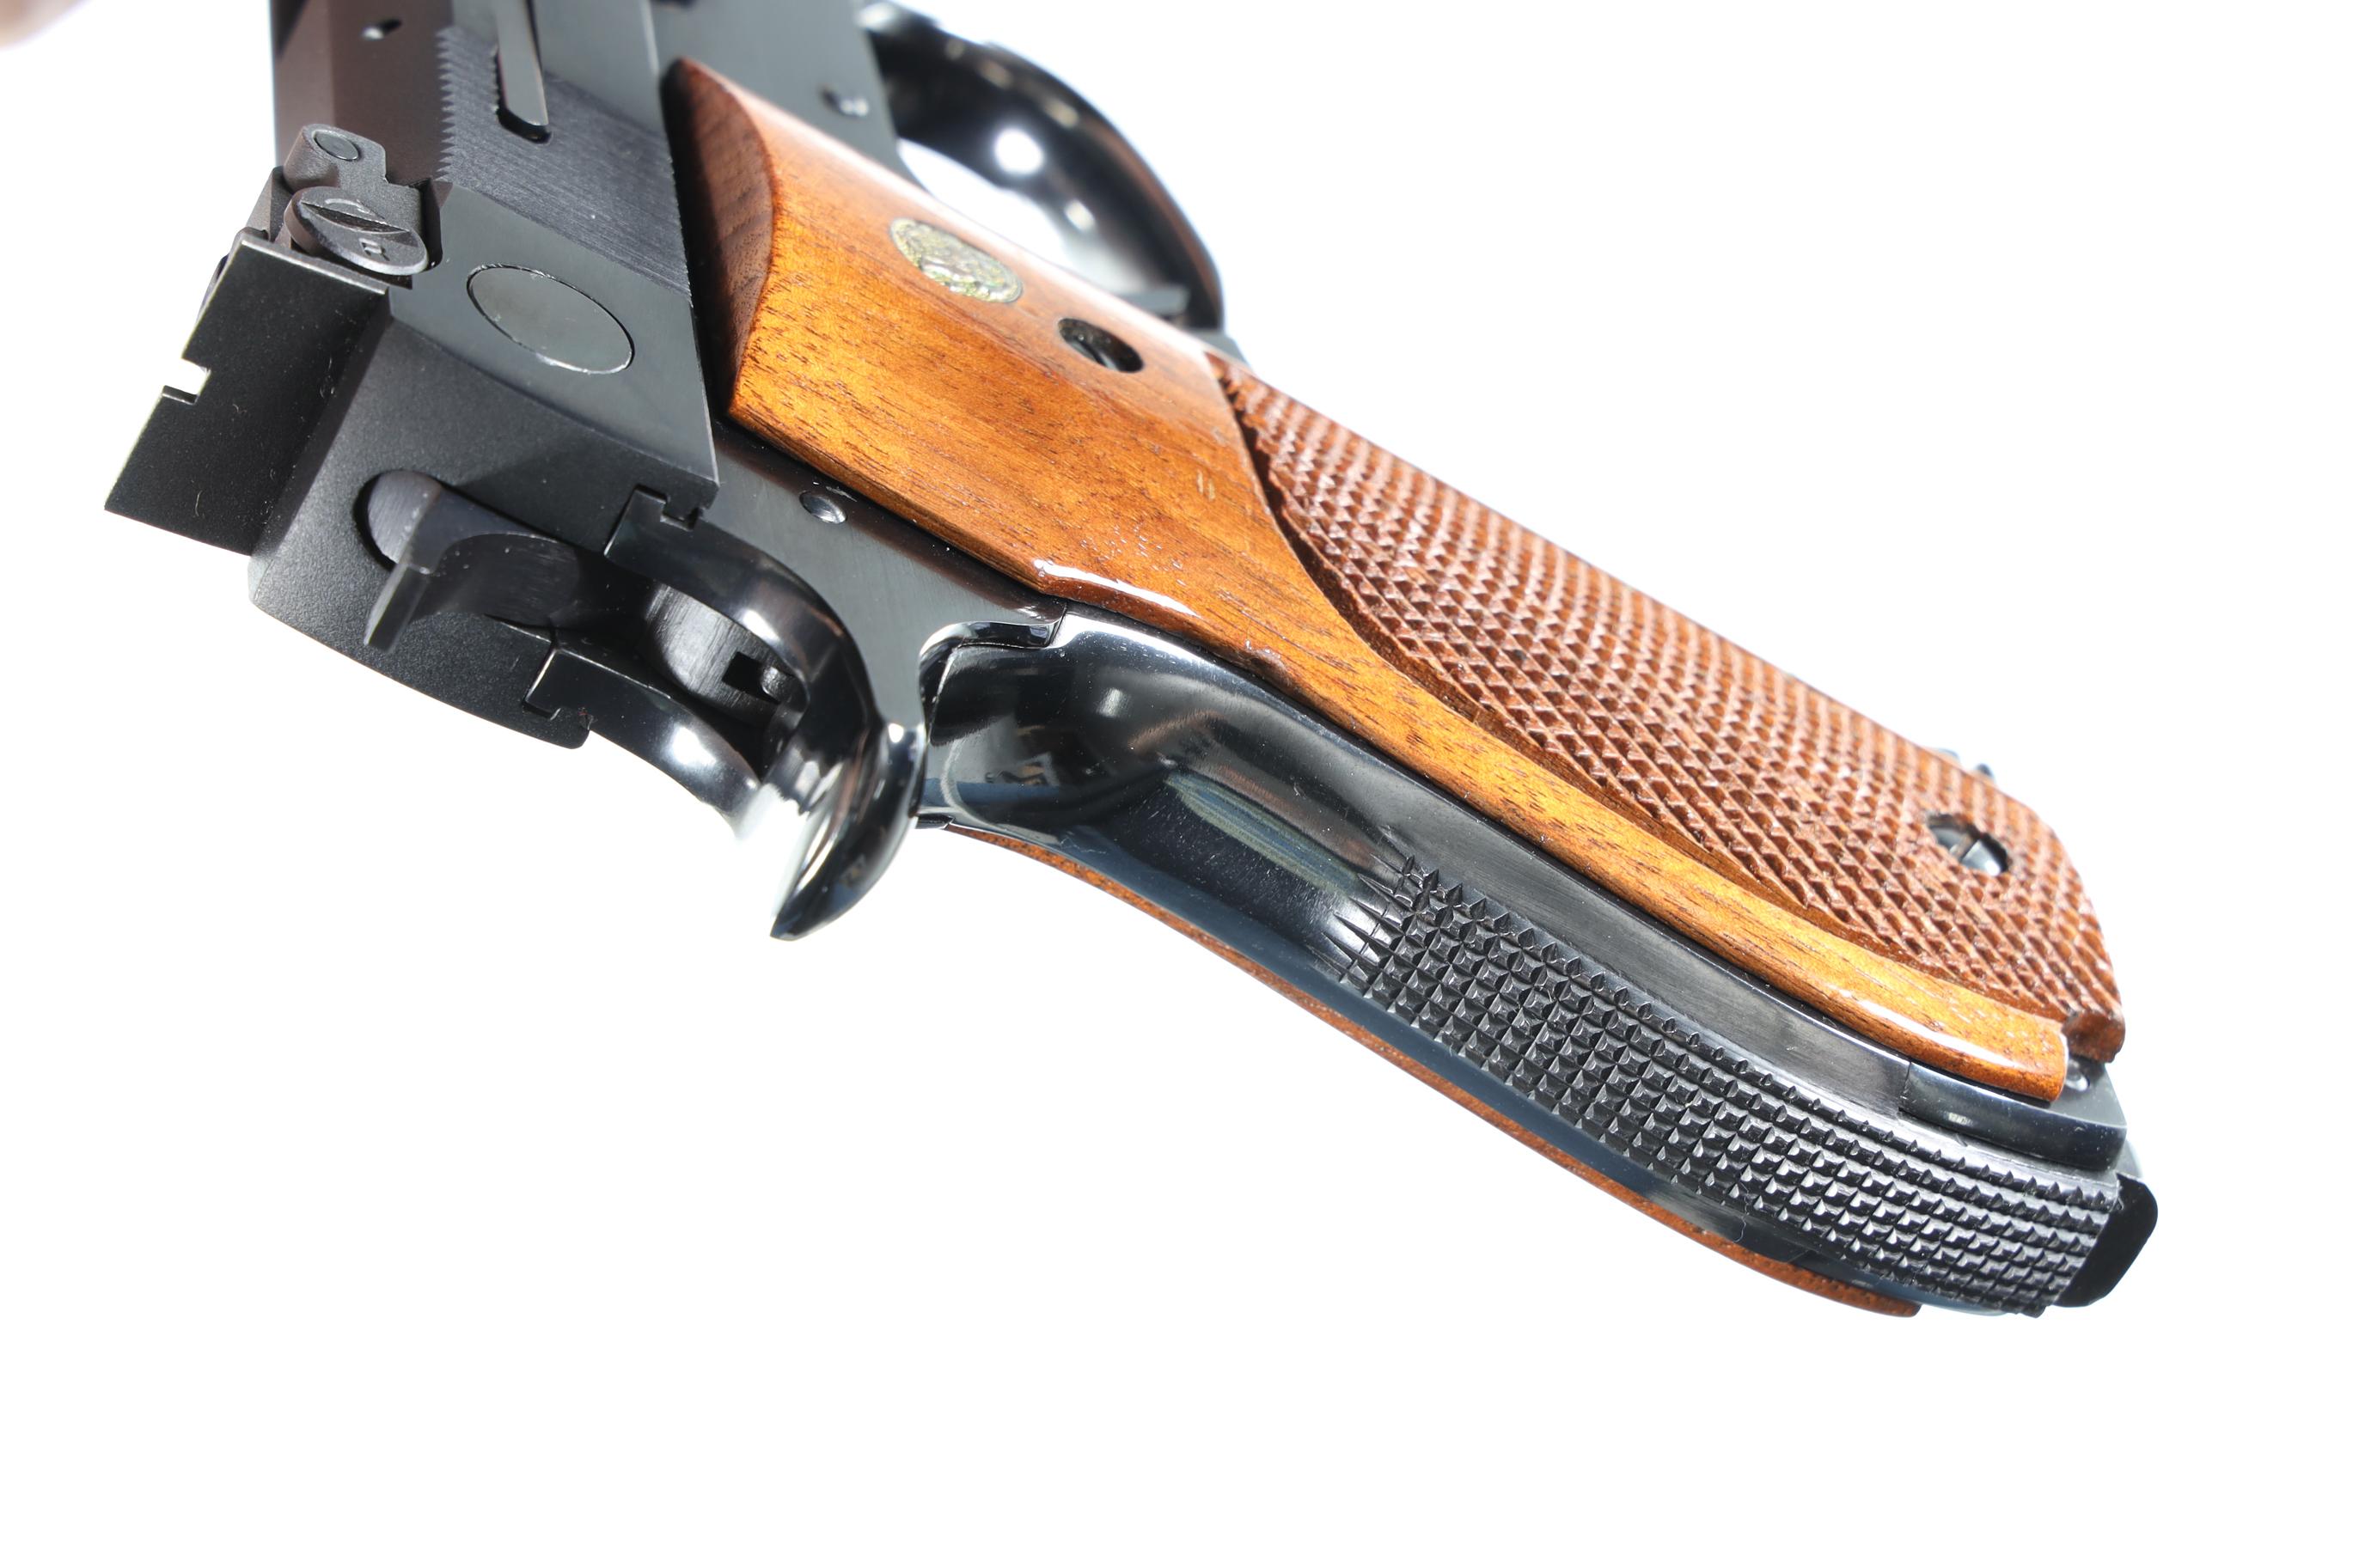 Smith & Wesson 52-2 Pistol .38 spl